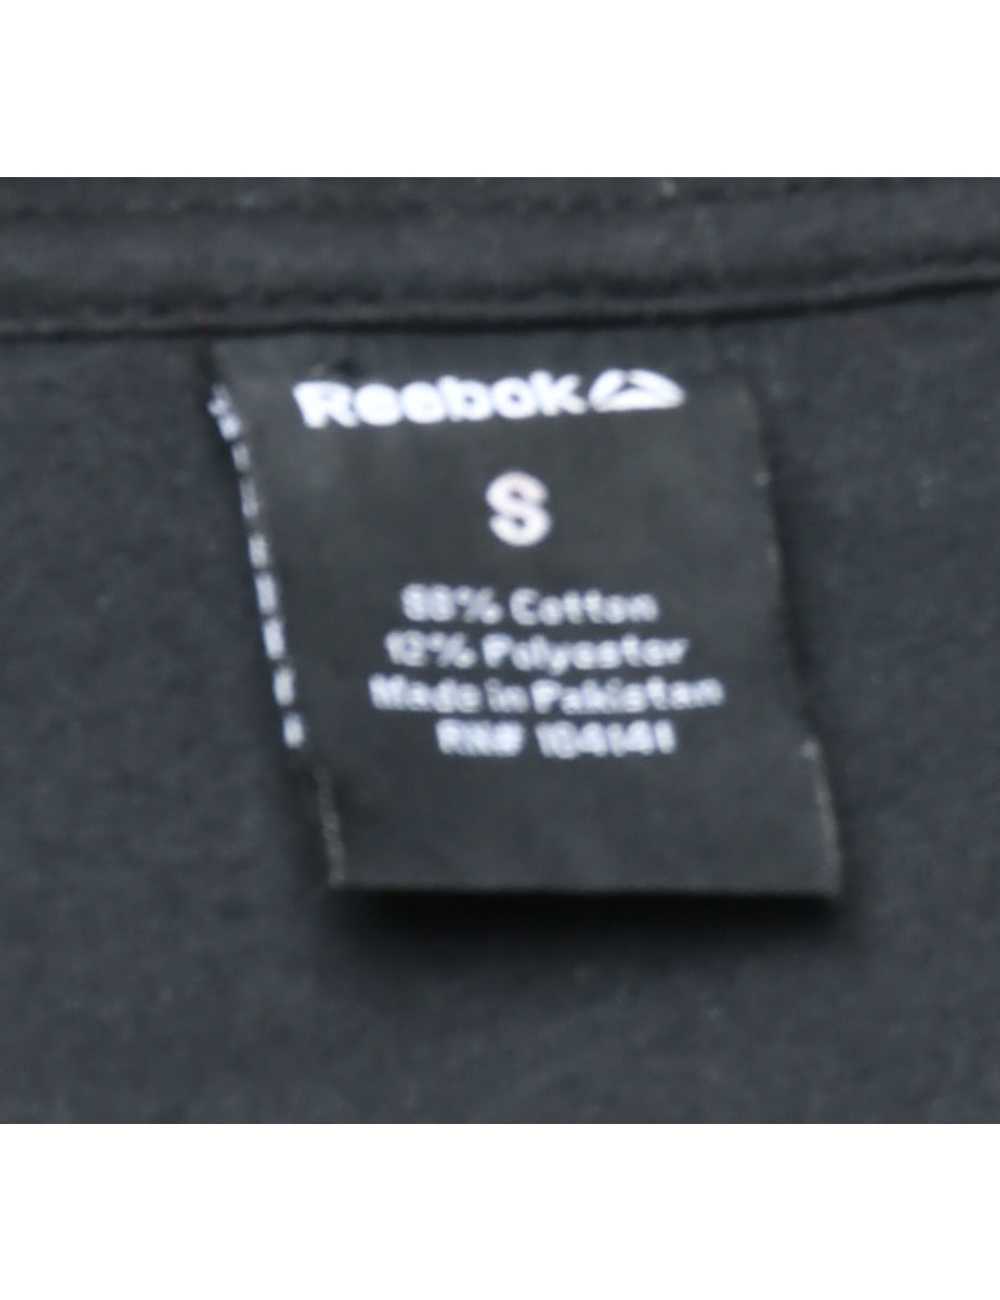 Reebok Plain Sweatshirt - S - image 4